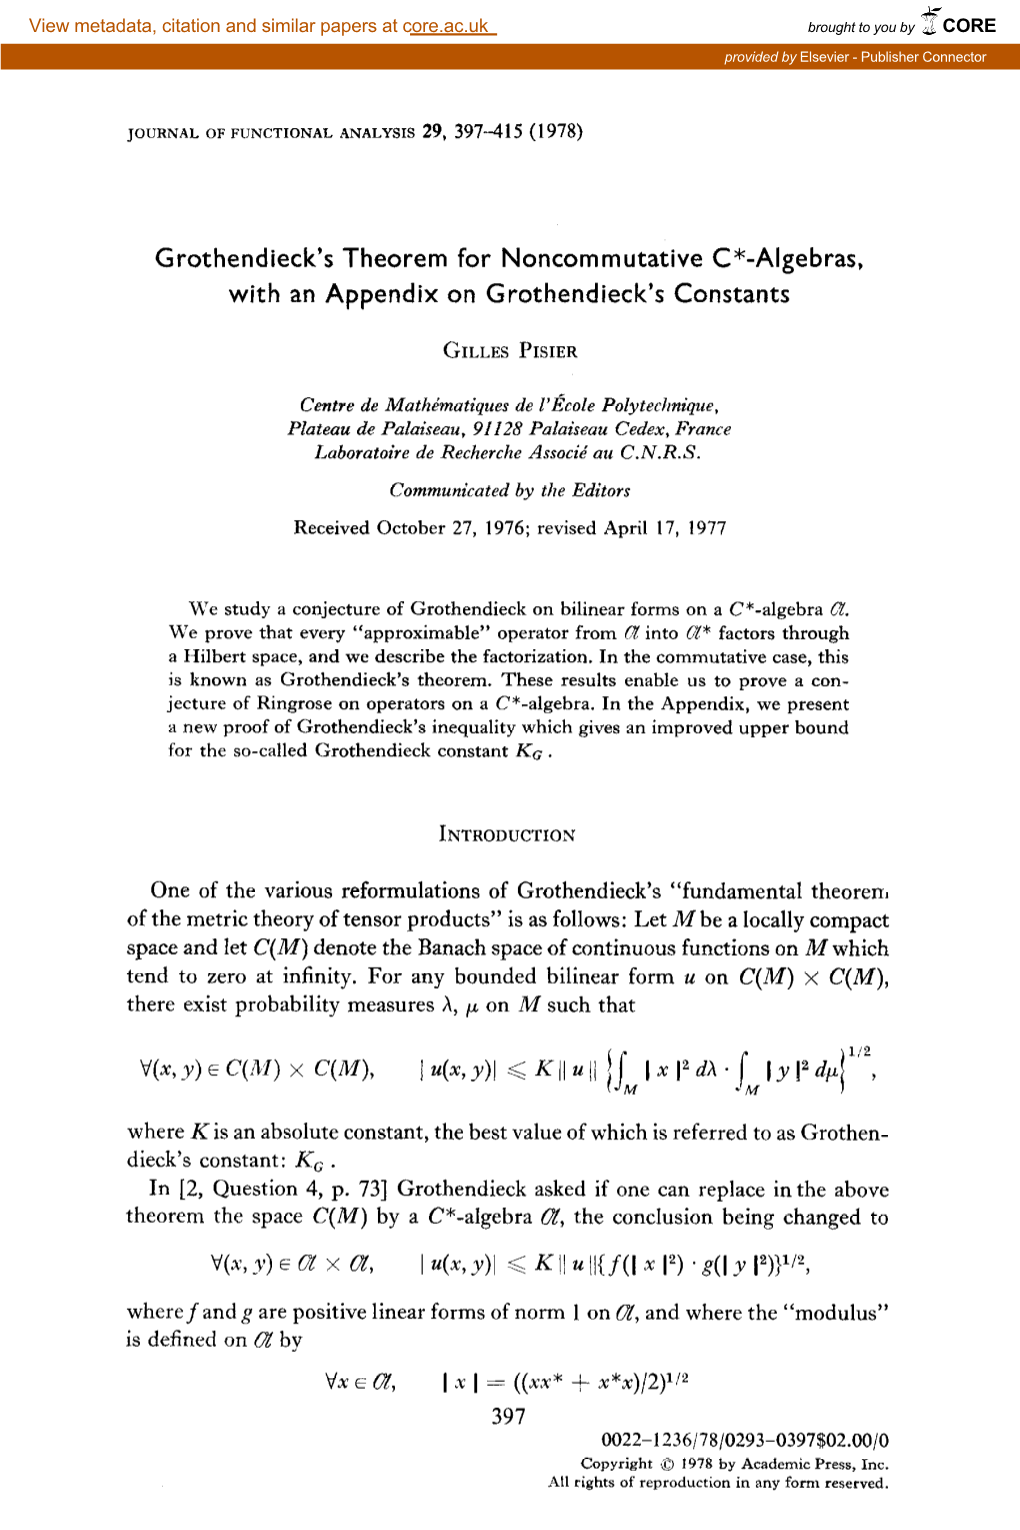 Grothendieck's Theorem for Noncommutative C*-Algebras, with an Appendix on Grothendieck's Constants I 4~ R)L &lt; K II U